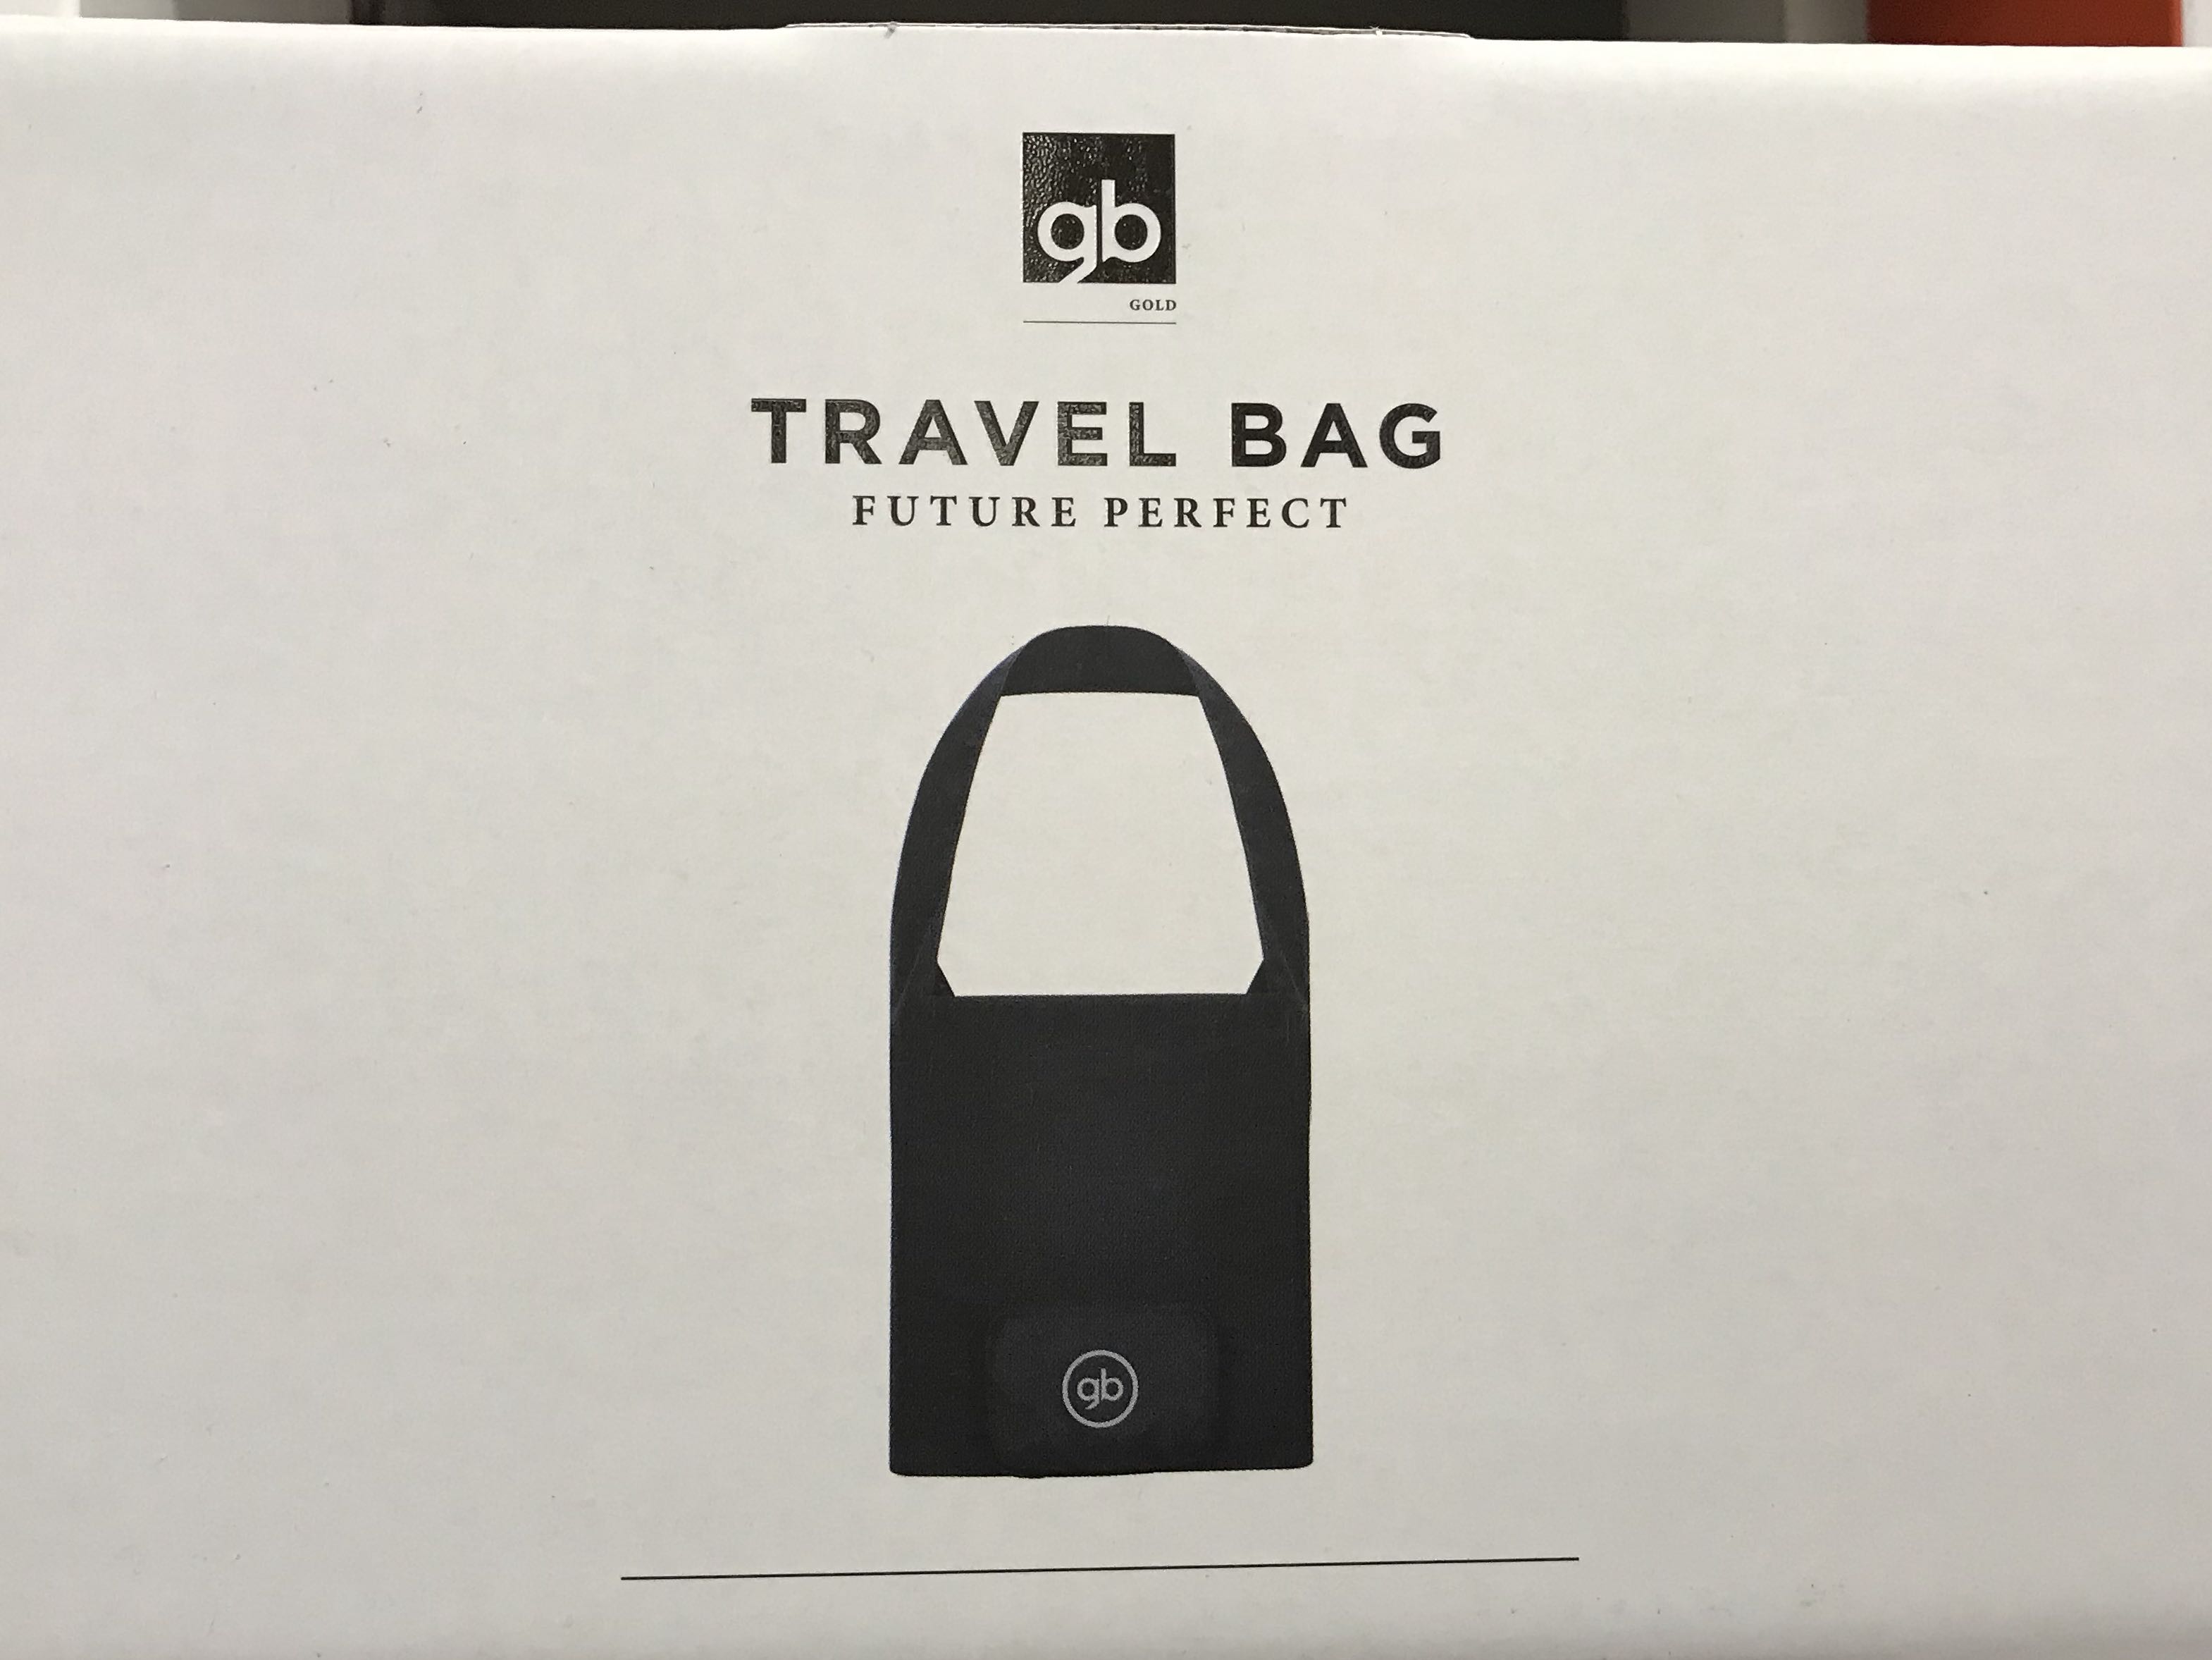 gb pockit plus travel bag